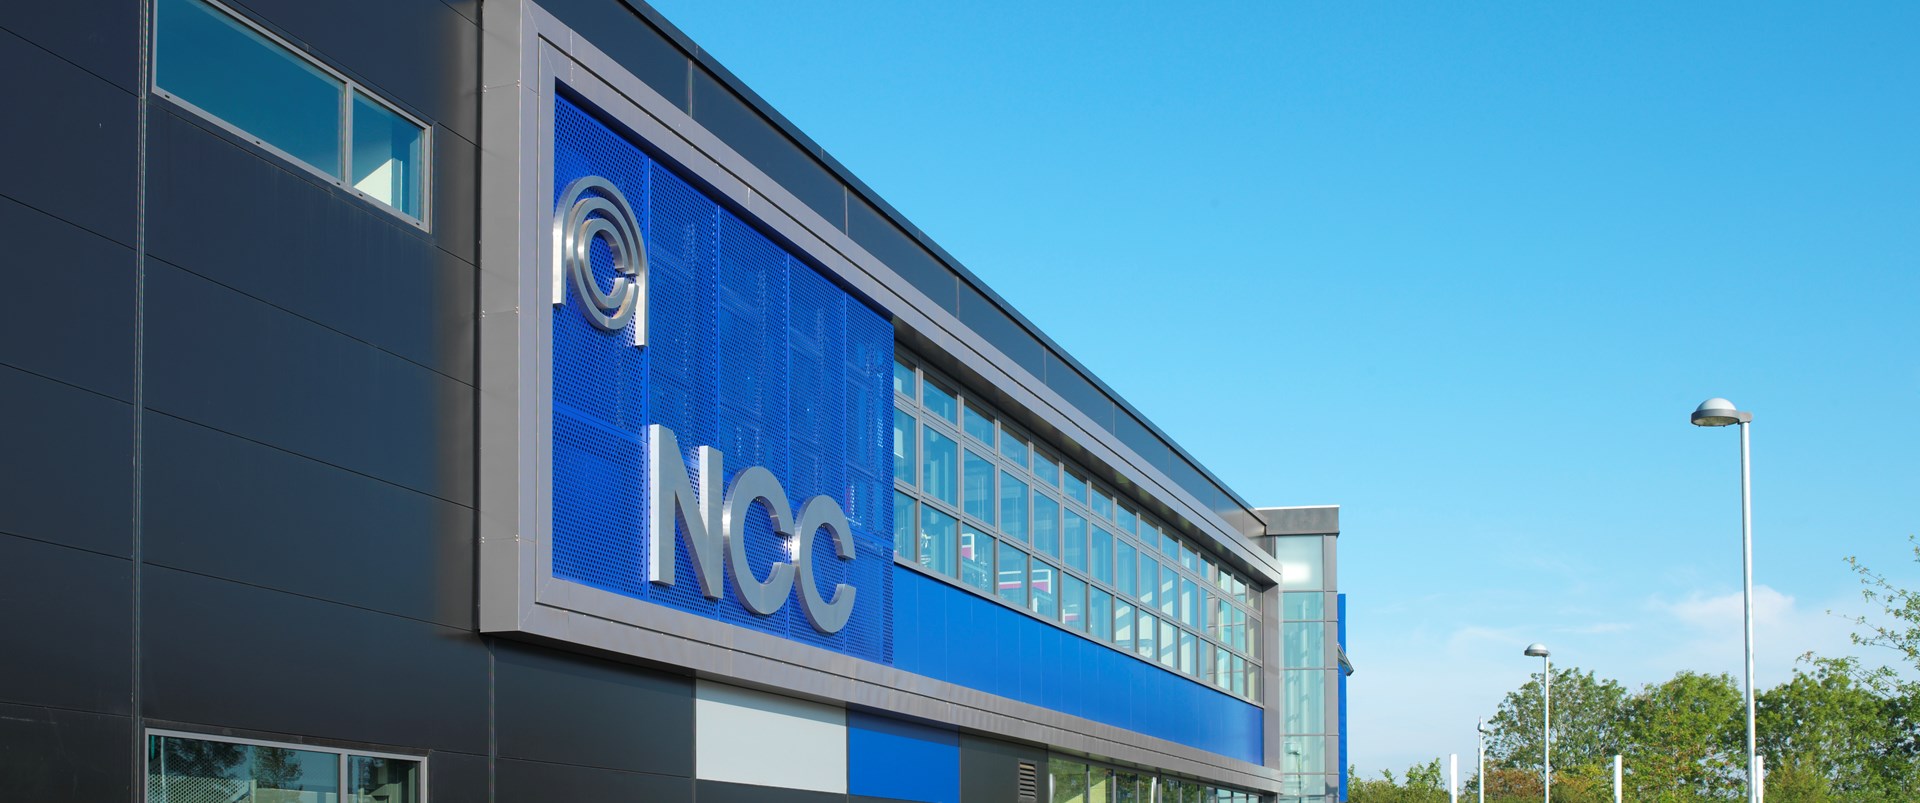 NCC Building Exterior